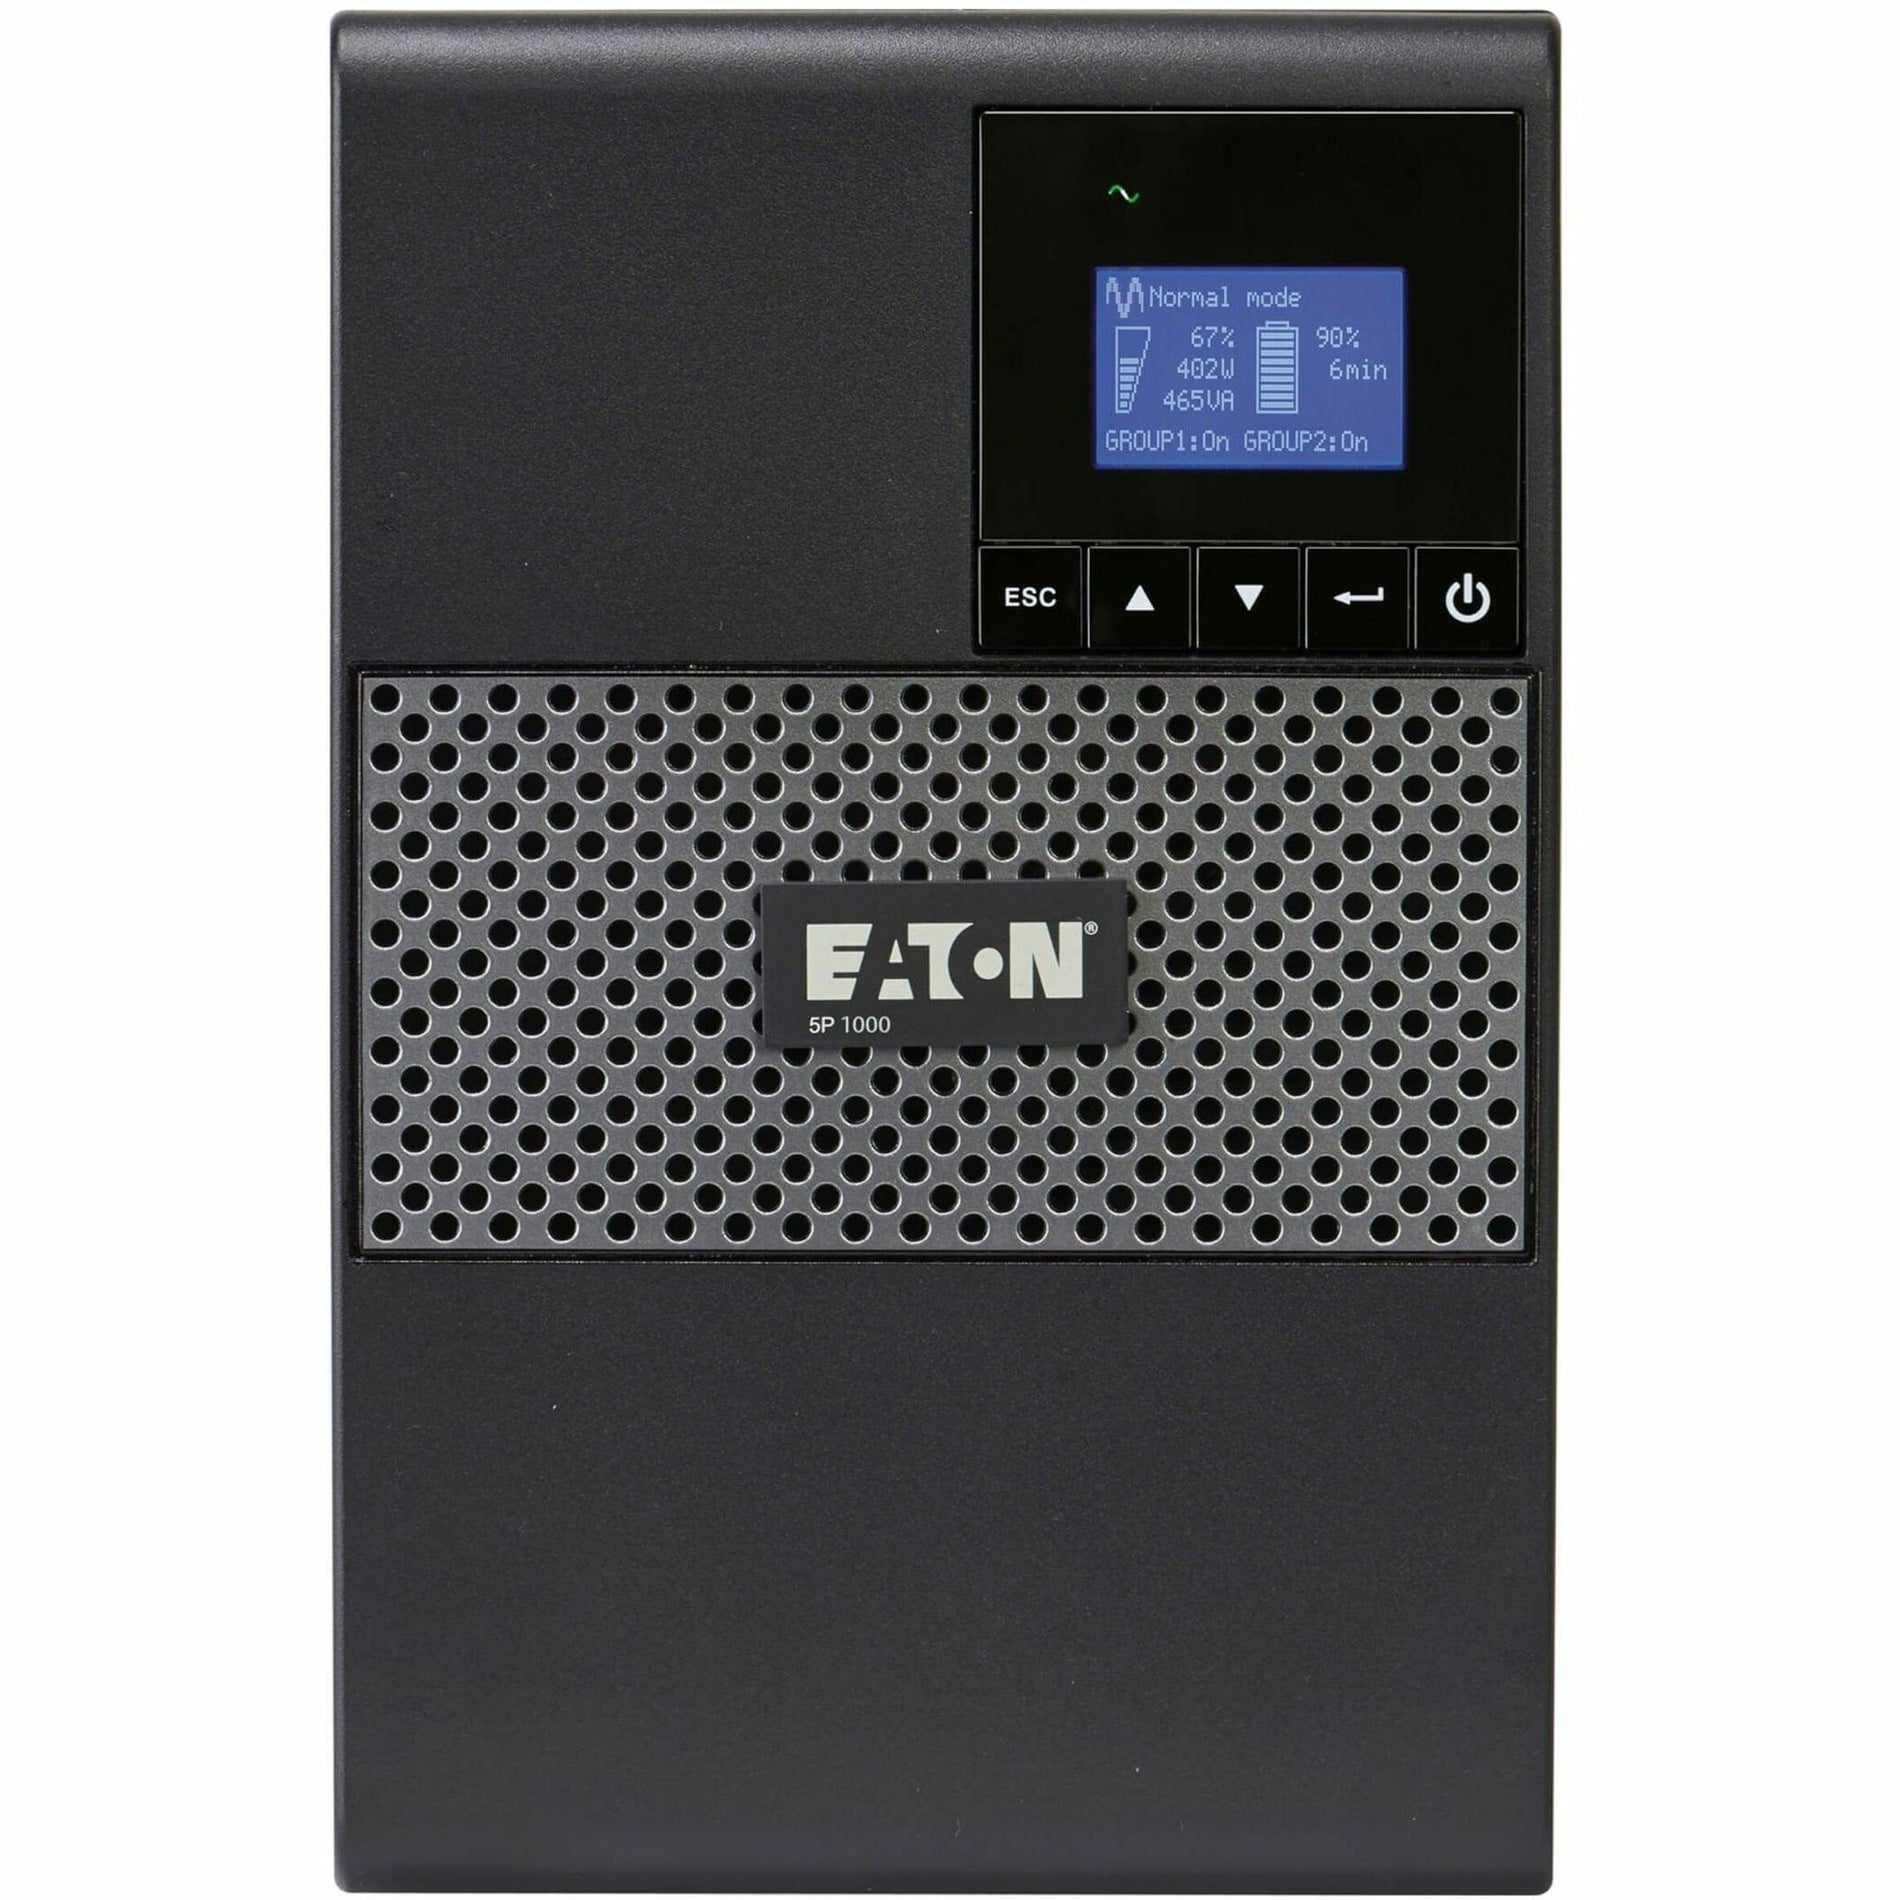 Eaton 5P 5P1500 1440VA 1100W Tower UPS, Cybersecure Network Card Option, True Sine Wave